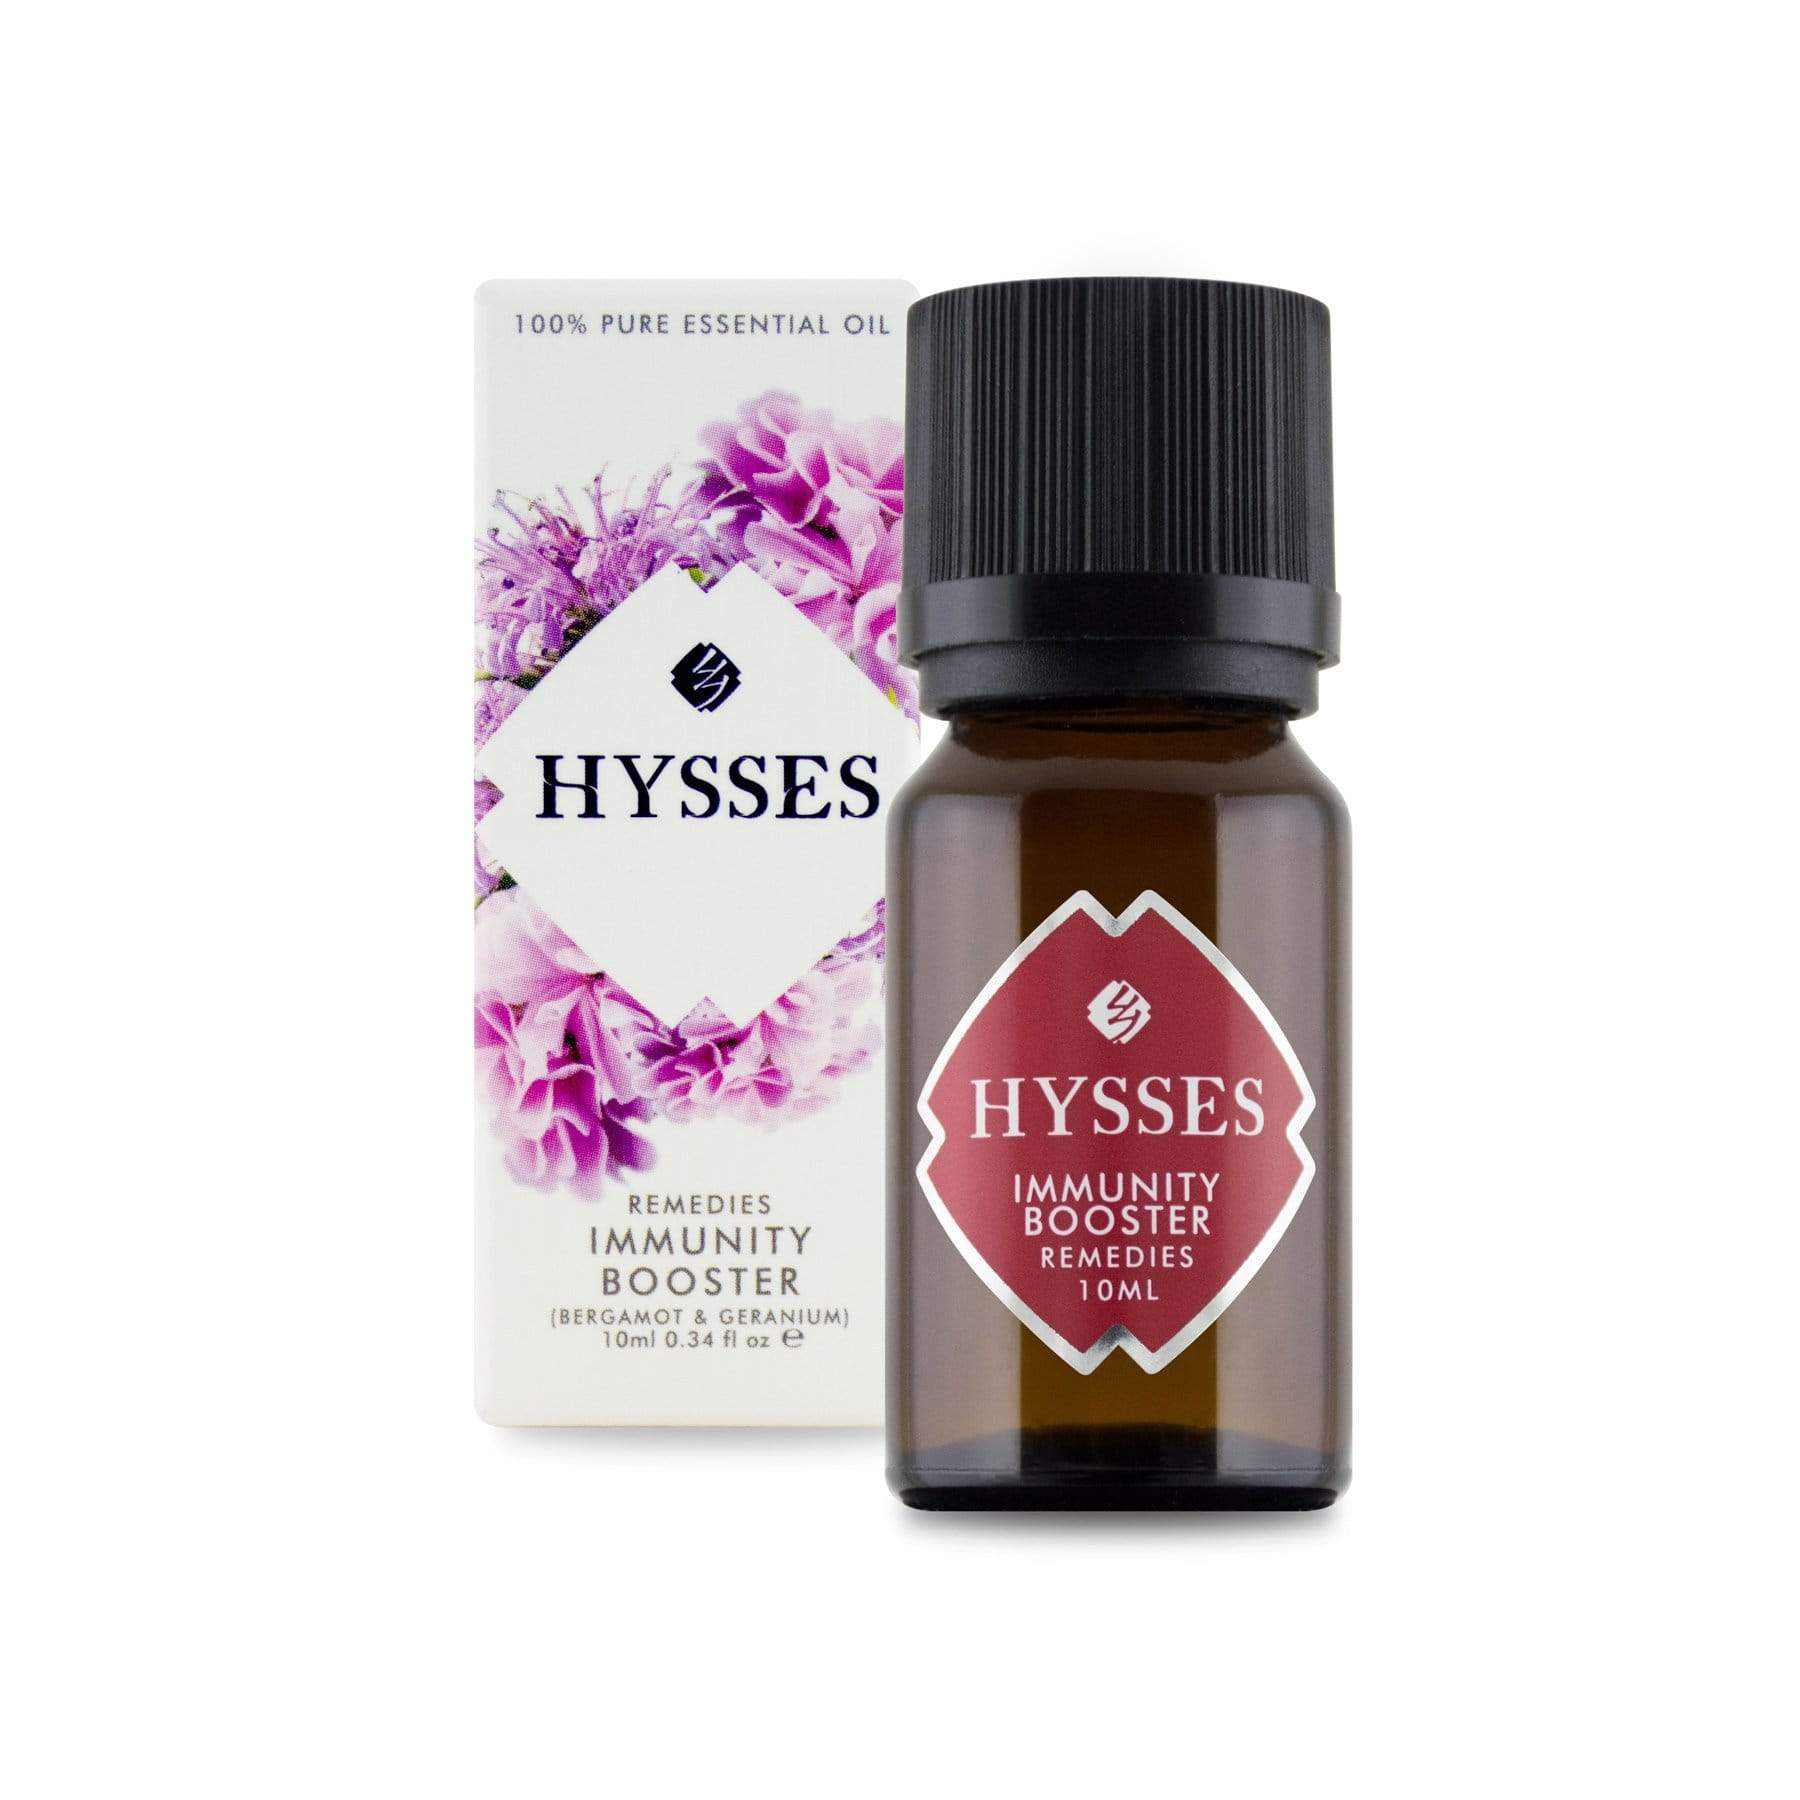 Hysses Essential Oil 10ml Remedies, Immunity Booster